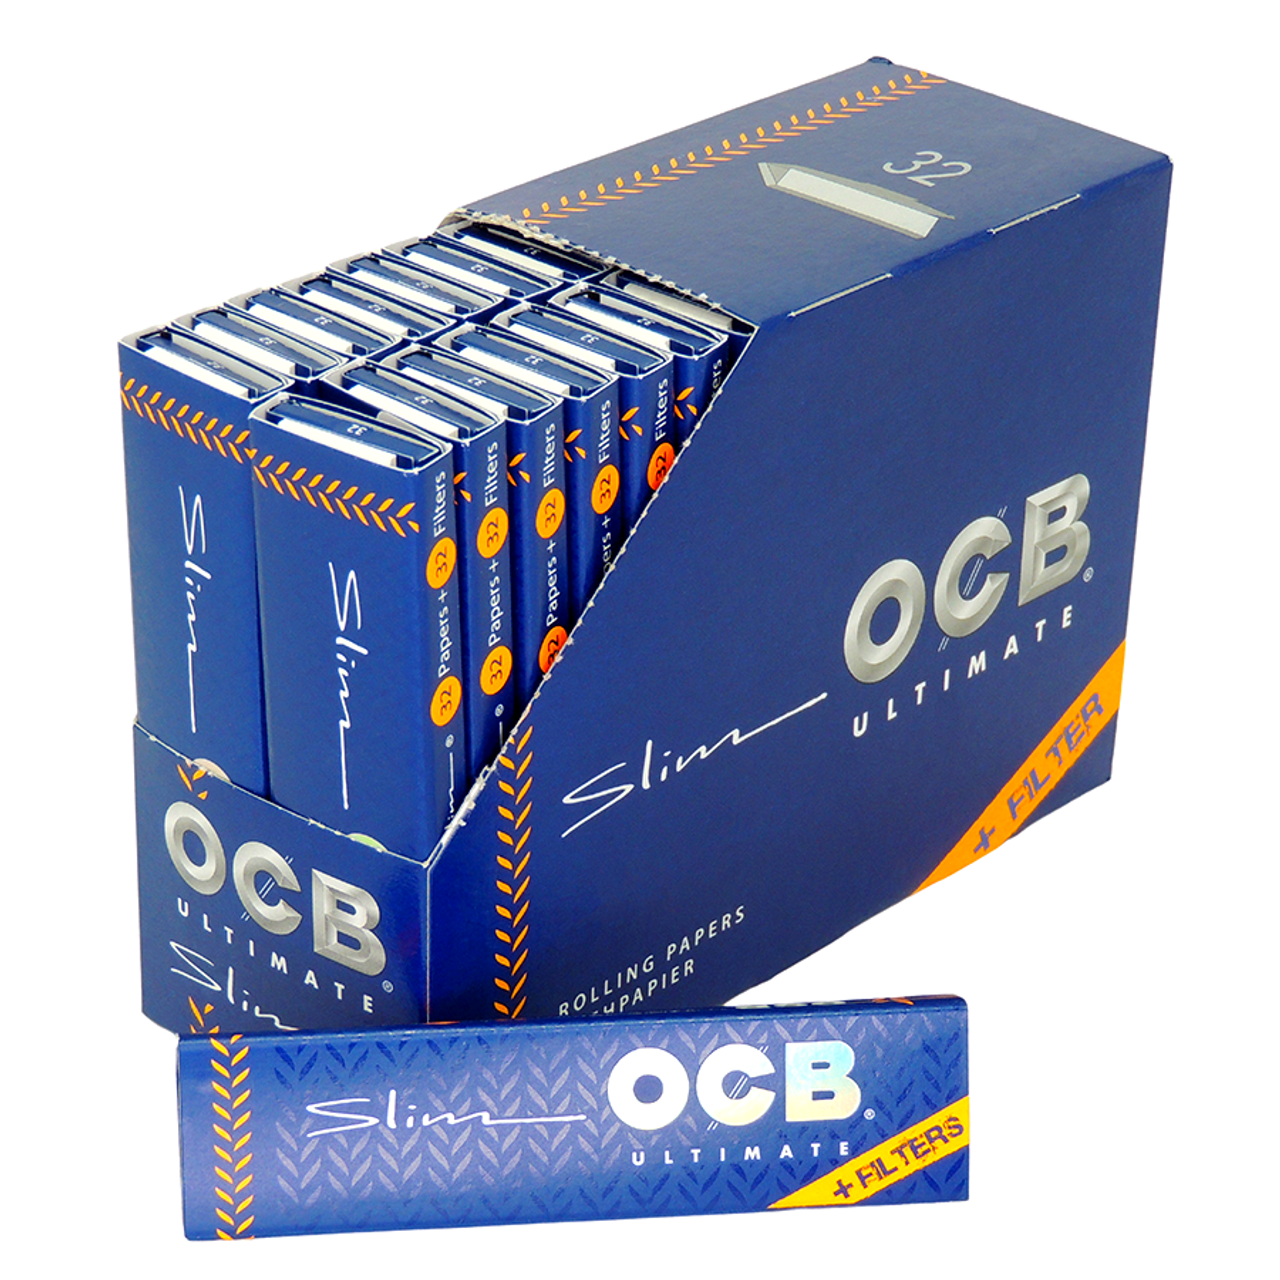 OCB Ultimate Tips Slim Papers - 32 ct. Box